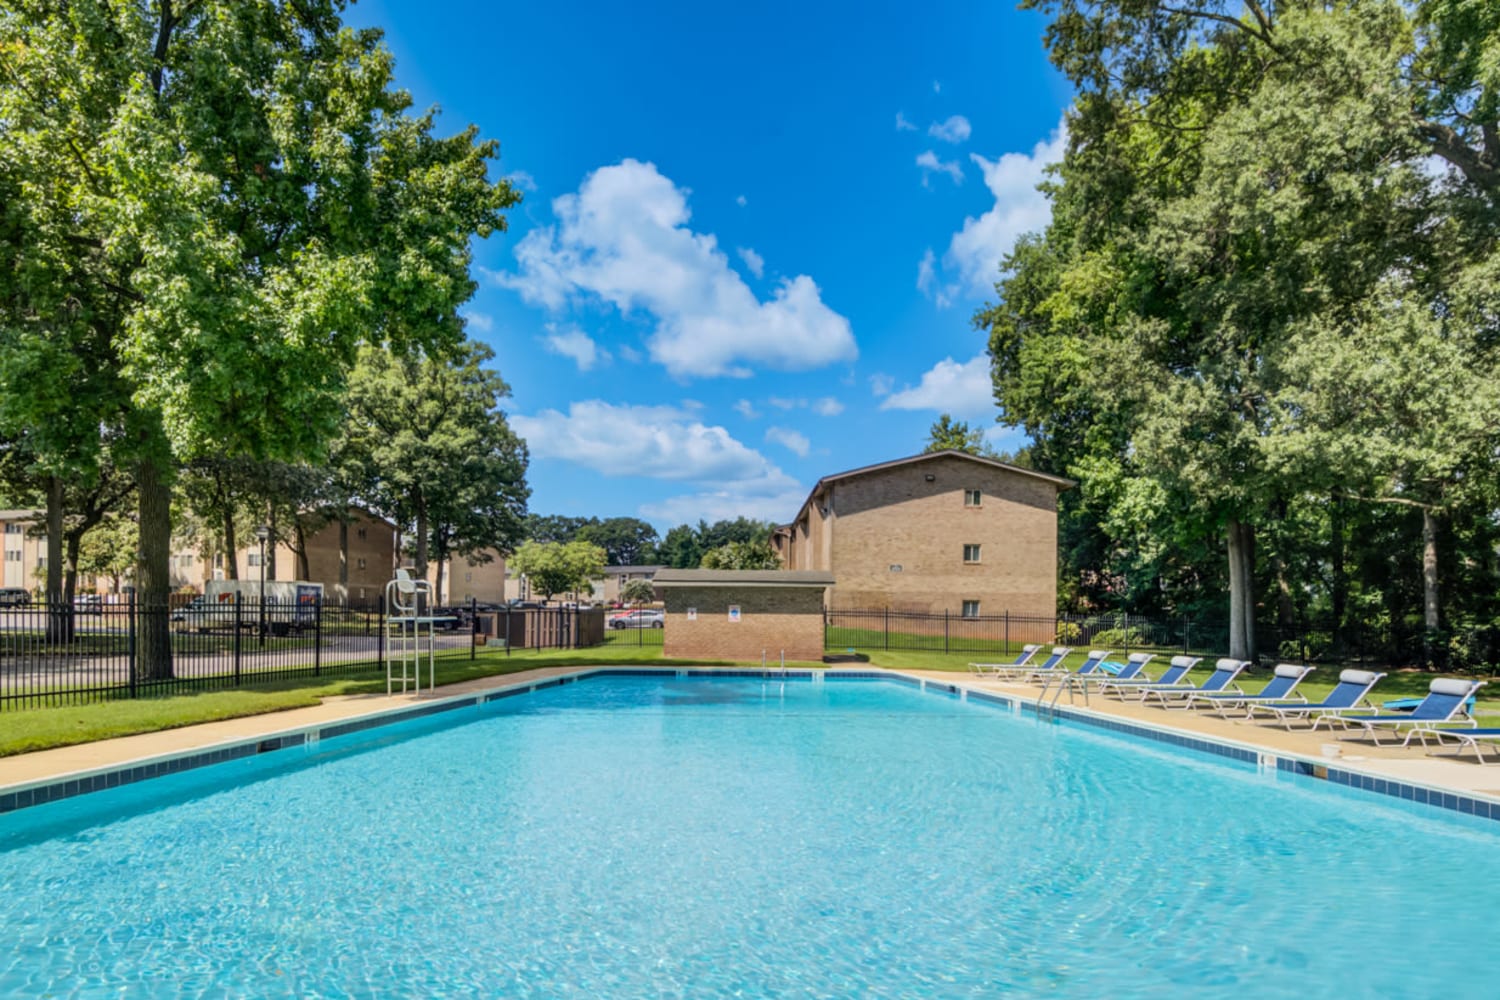 Swimming pool at Cedar Creek Apartment Homes in Glen Burnie, Maryland